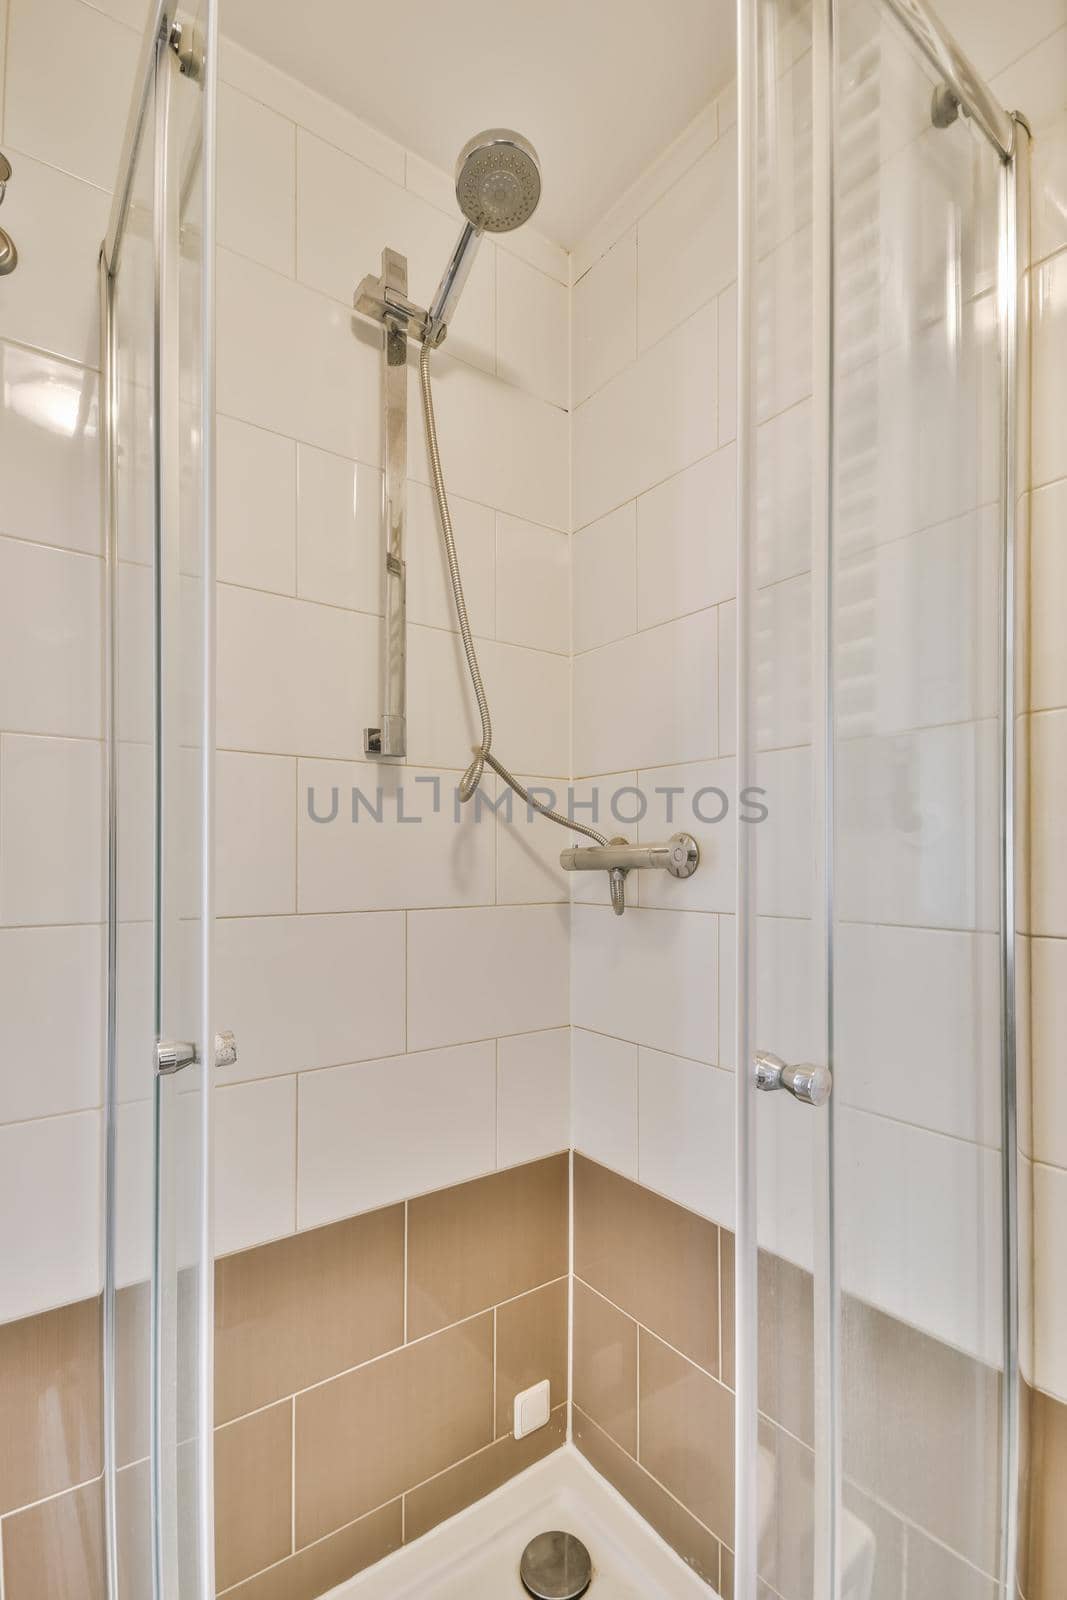 Delightful bathroom with modern glass-enclosed walk-in shower